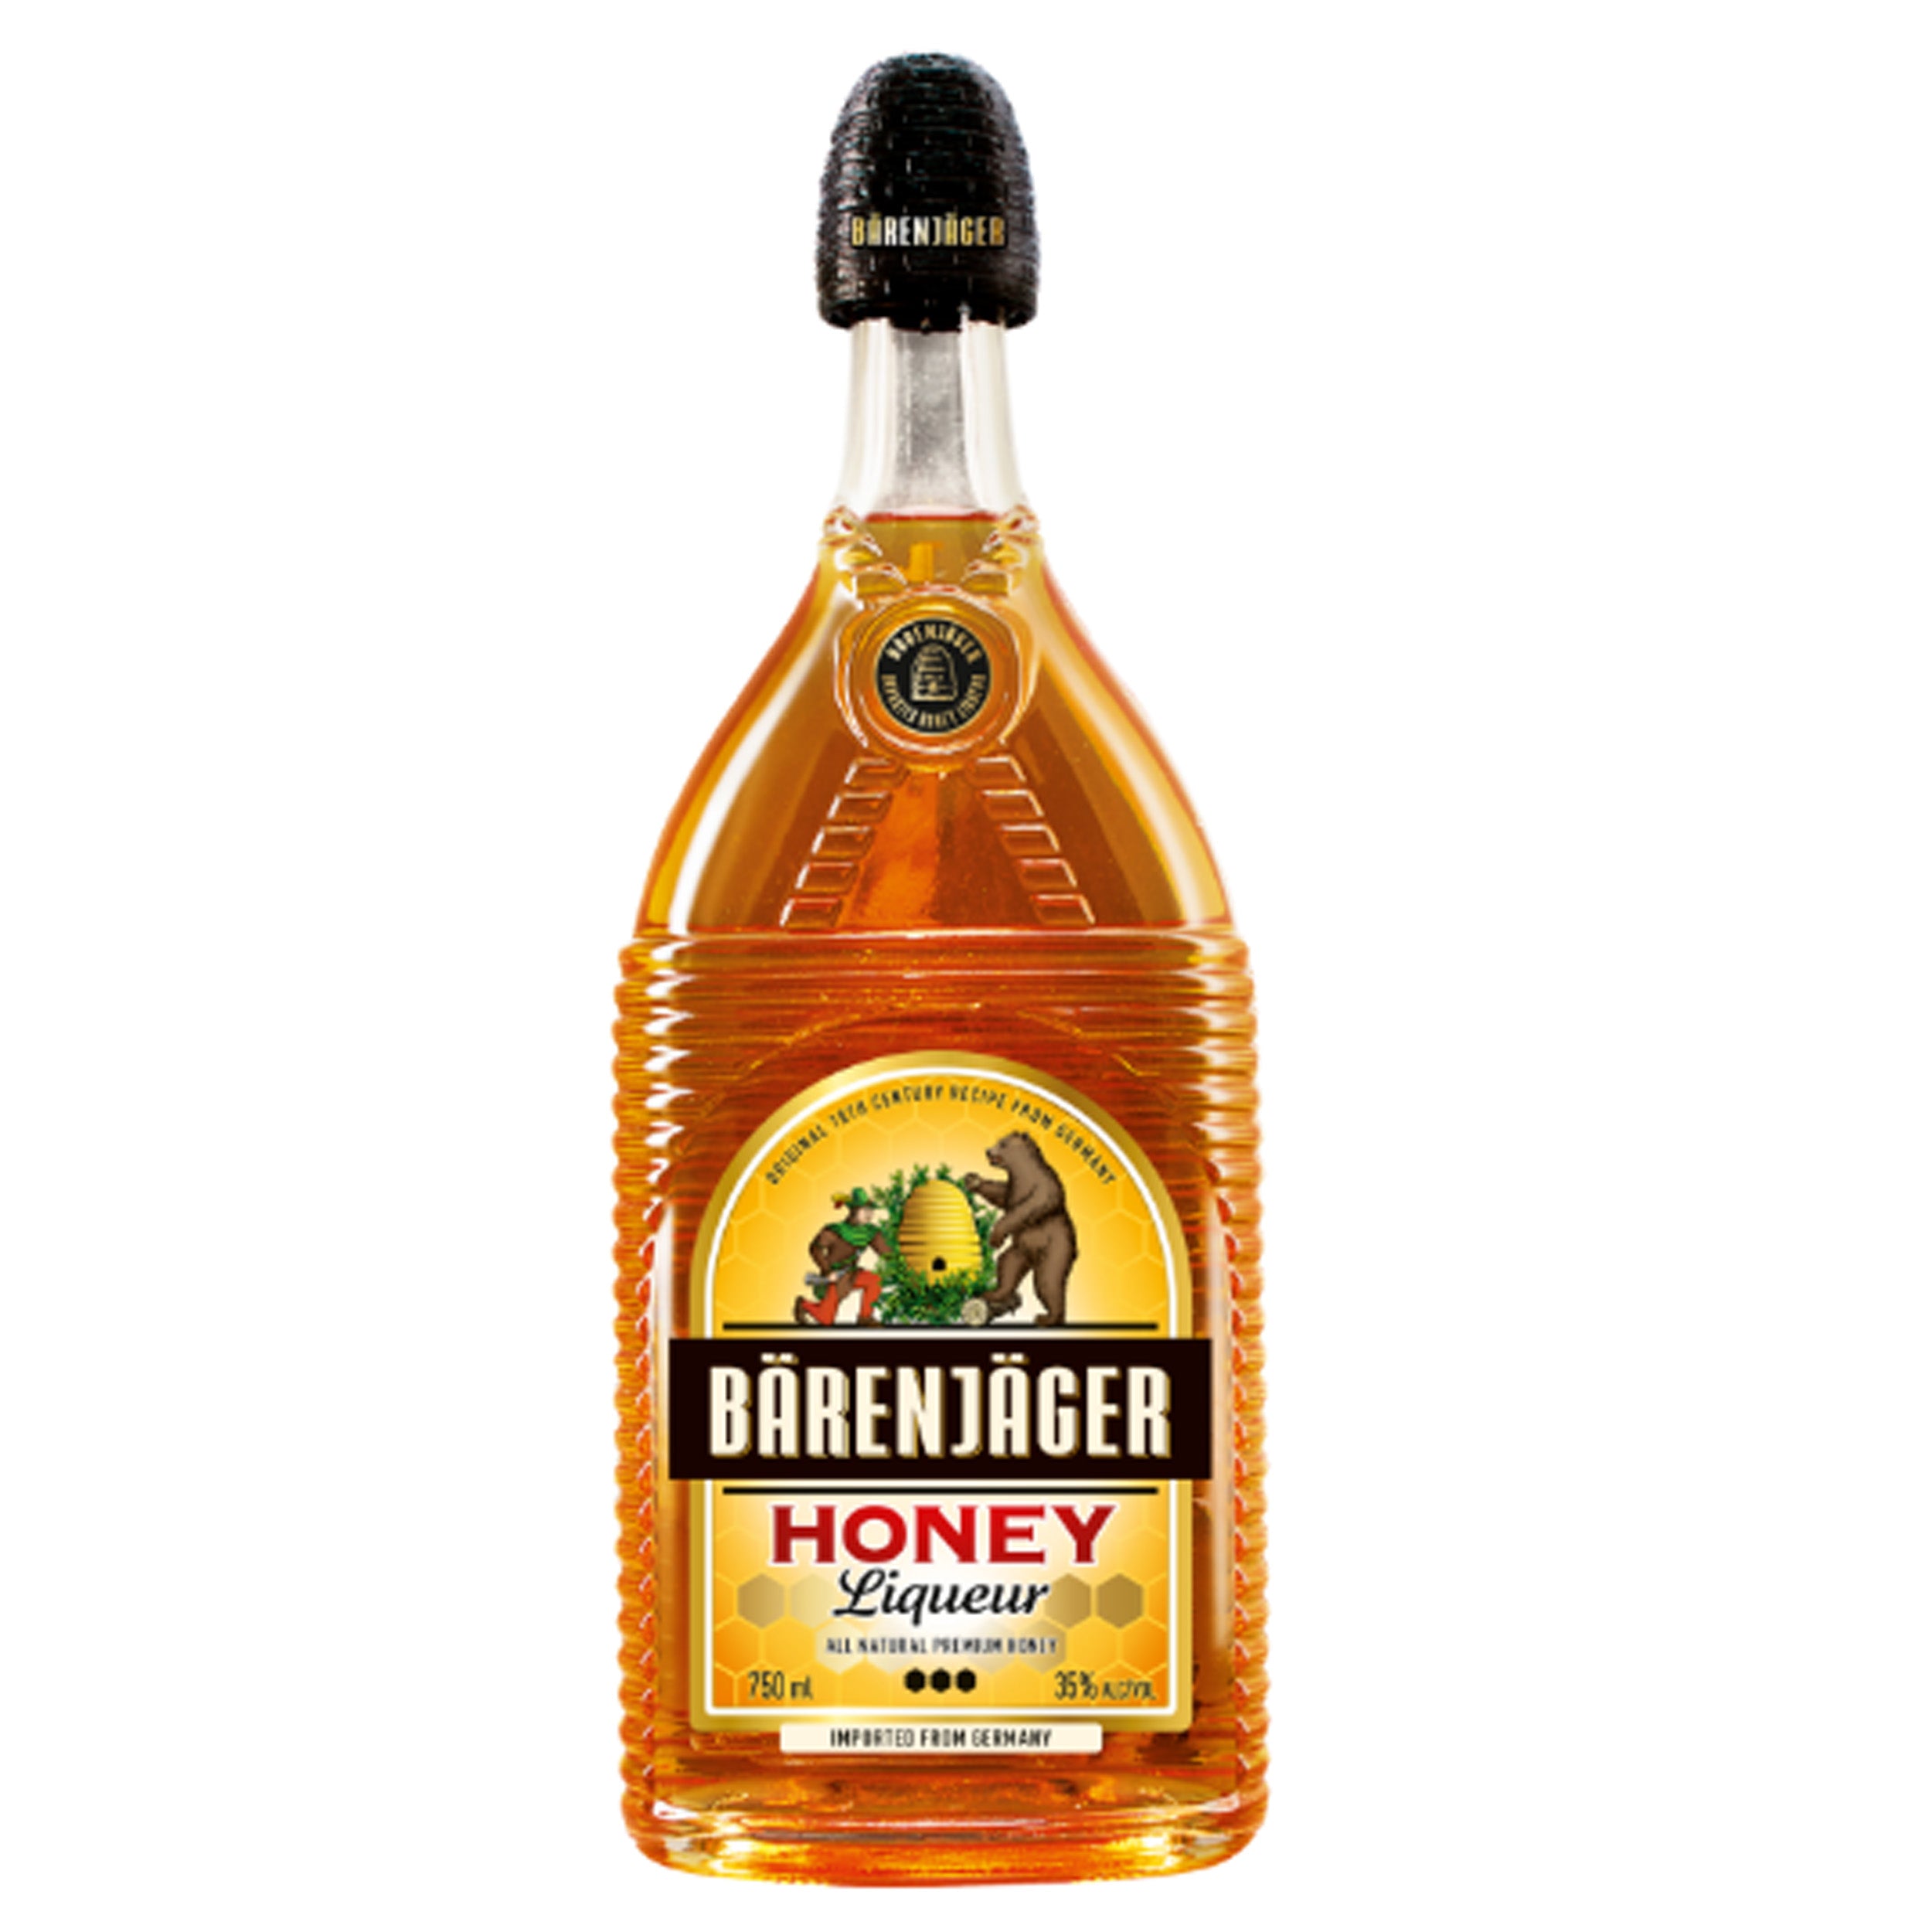 Barenjager Honey Liqueur